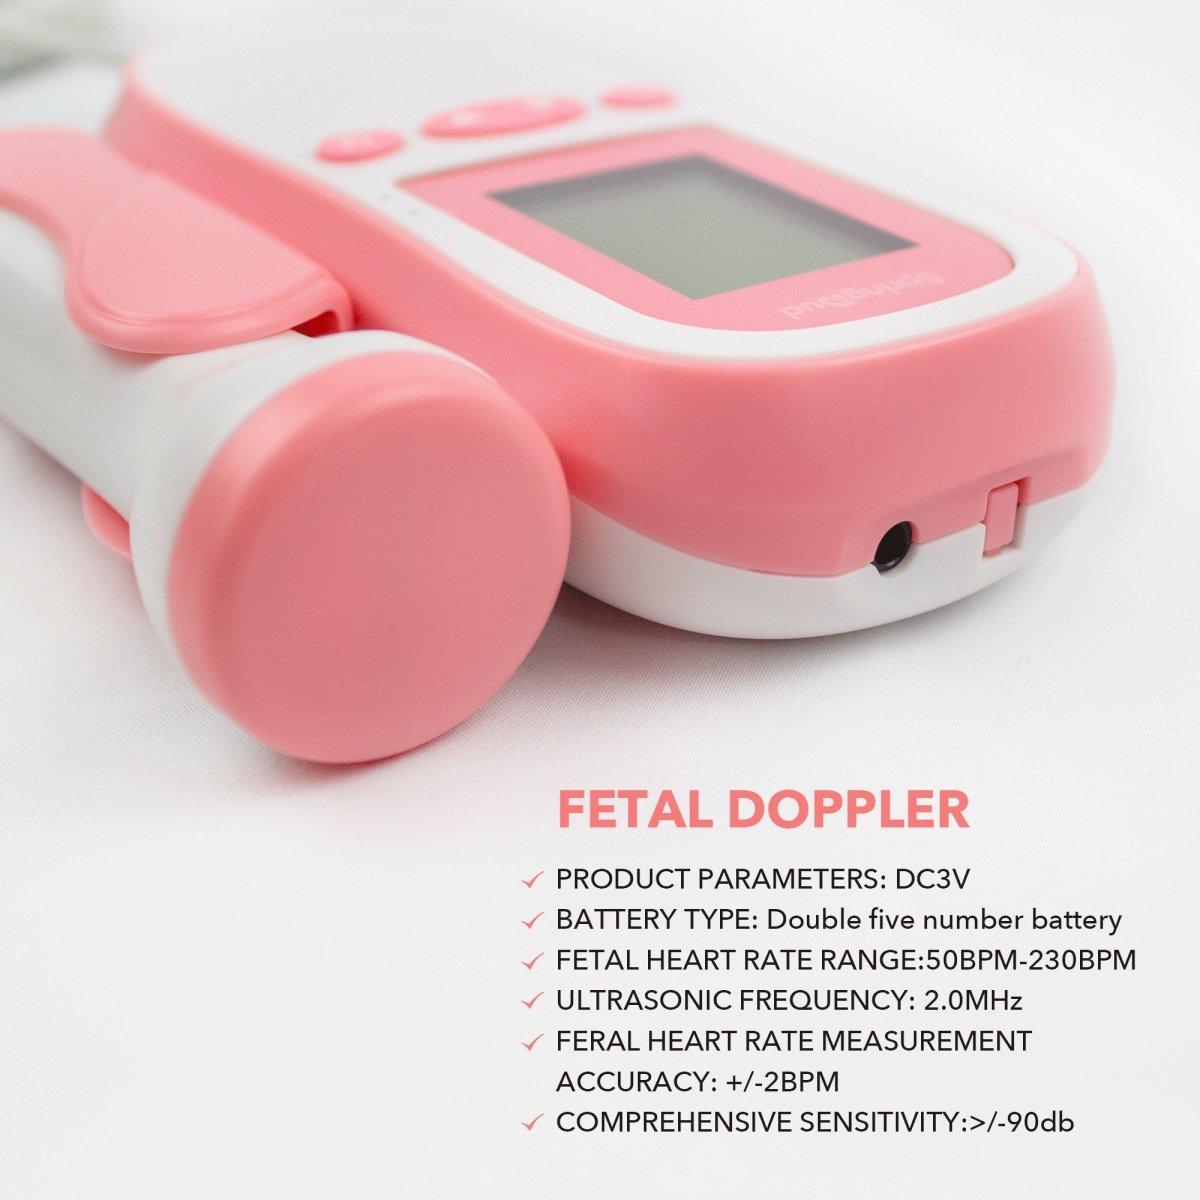 Doppler Foetal + Gel ultrasonique